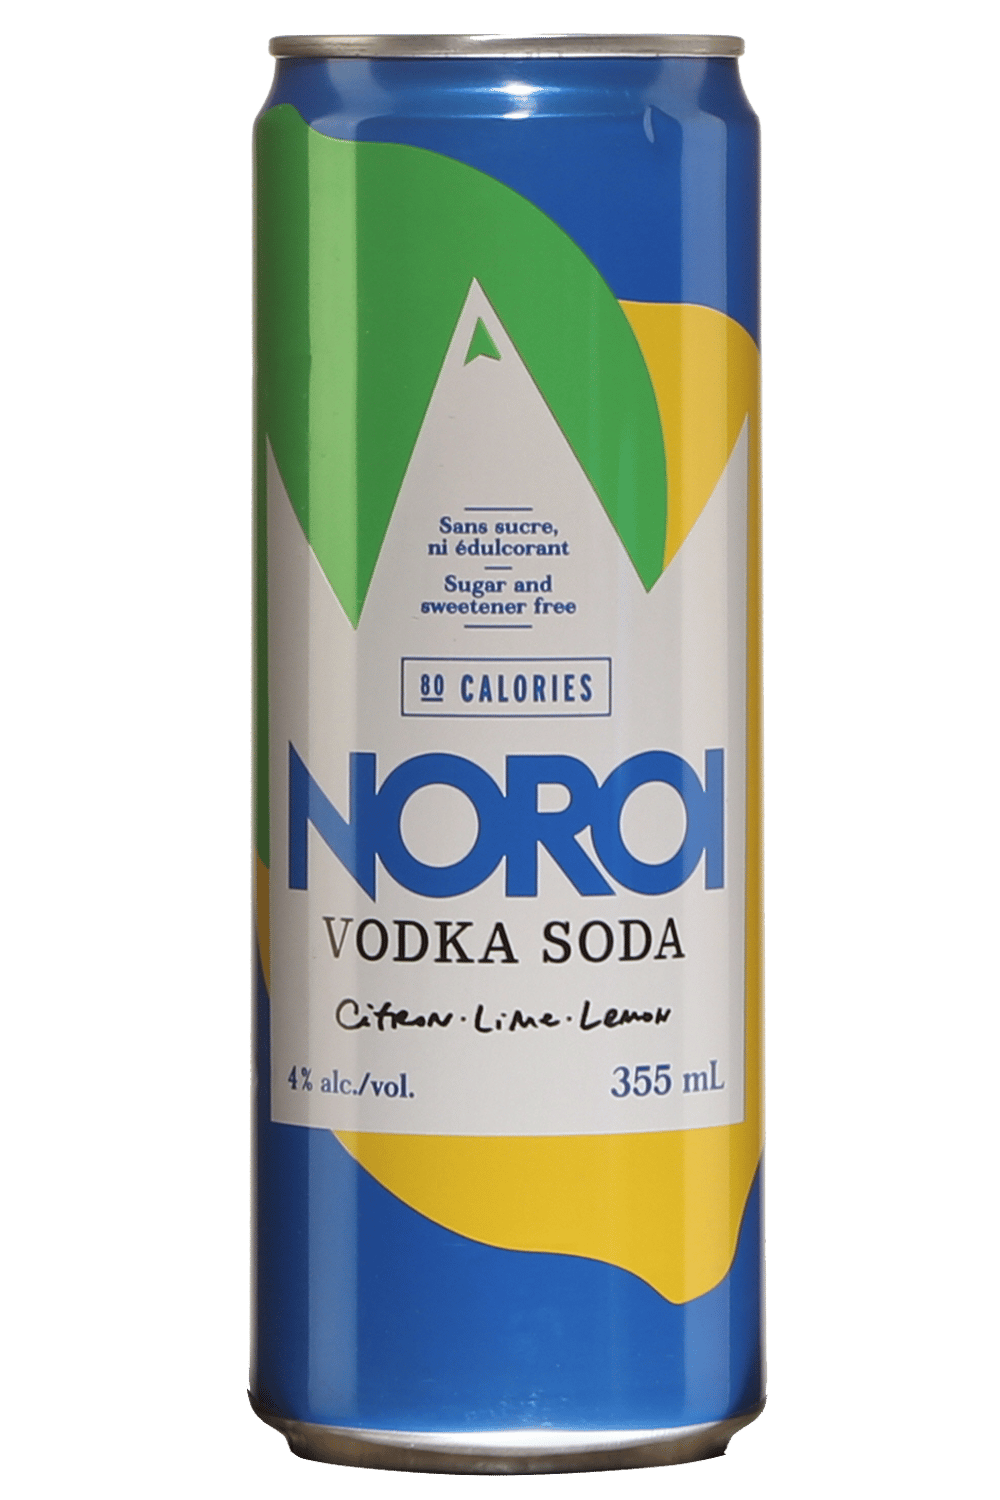 prêts à boire - Vodka Soda Noroi